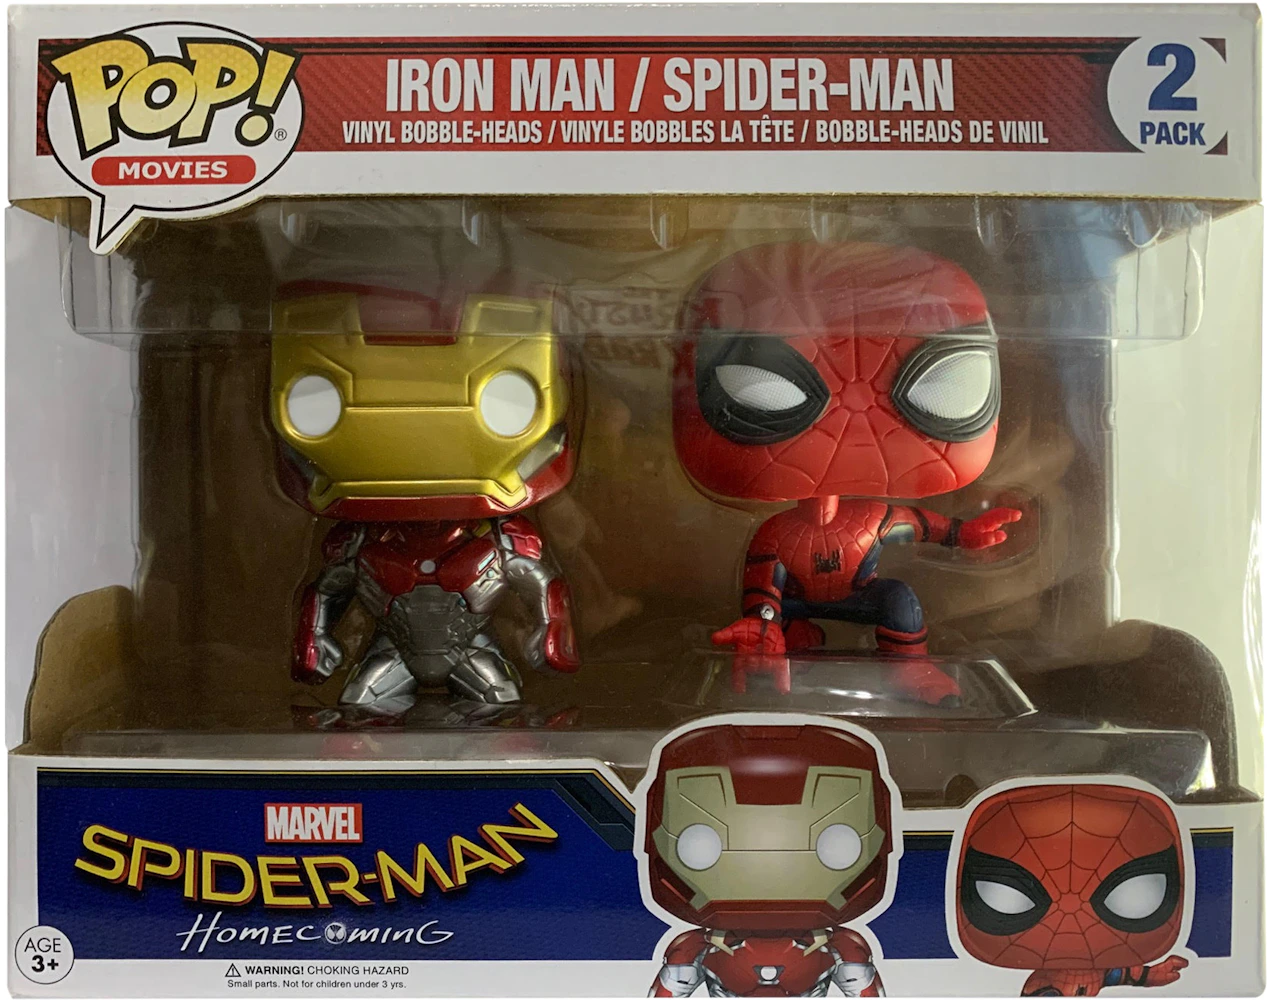 Funko Pop! Movies Marvel Spider-man Homecoming Iron Man / Spider-Man 2 Pack  - US